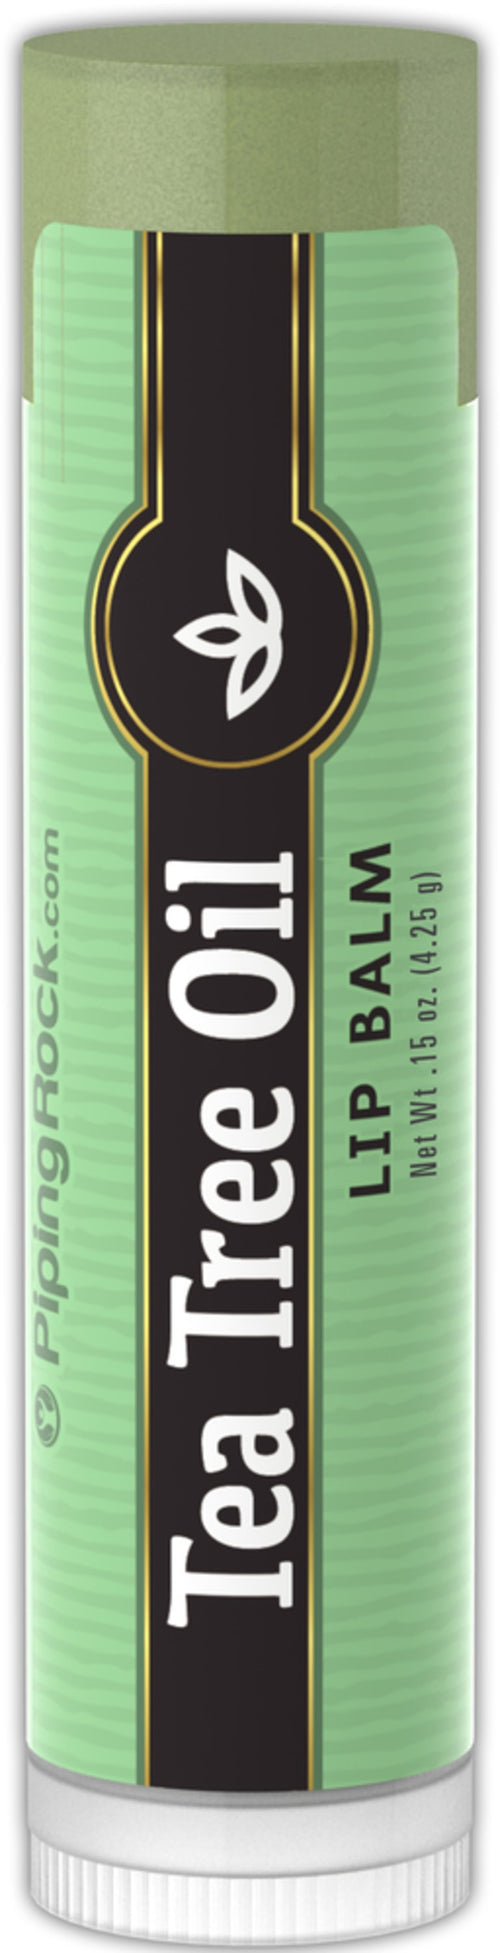 Teebaumöl-Lippenbalsam 0.15 oz 4 g Röhrchen    